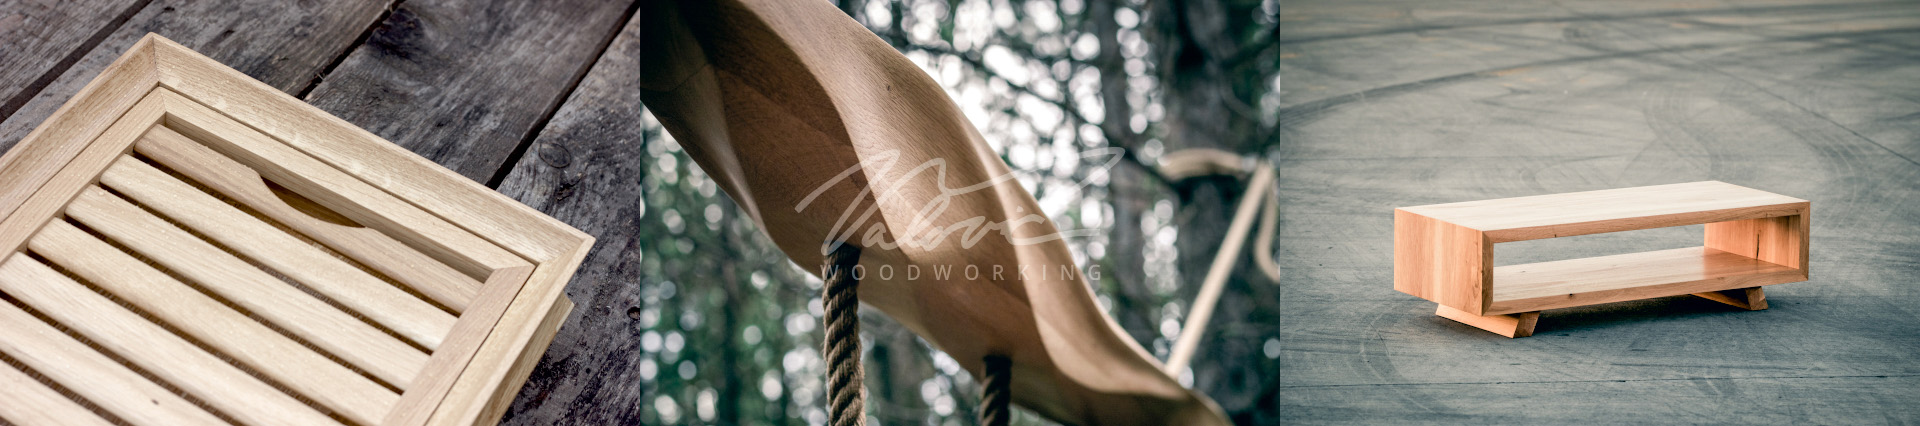 Valovič_Woodworking